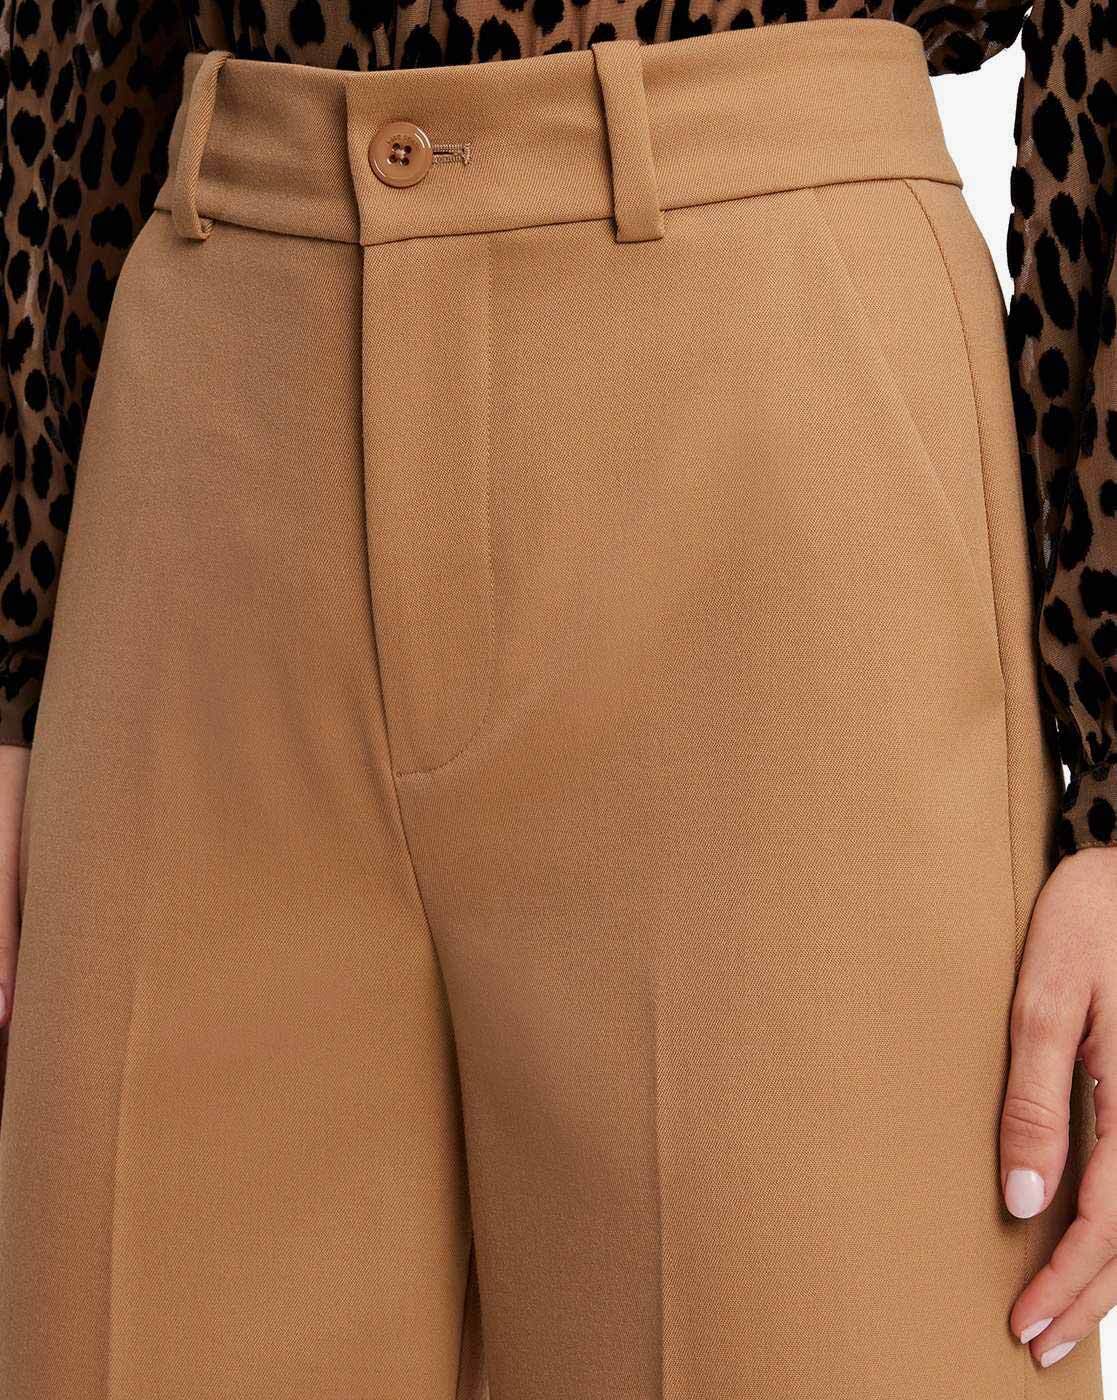 Ladies brown trousers | Ladies brown trousers in high quality